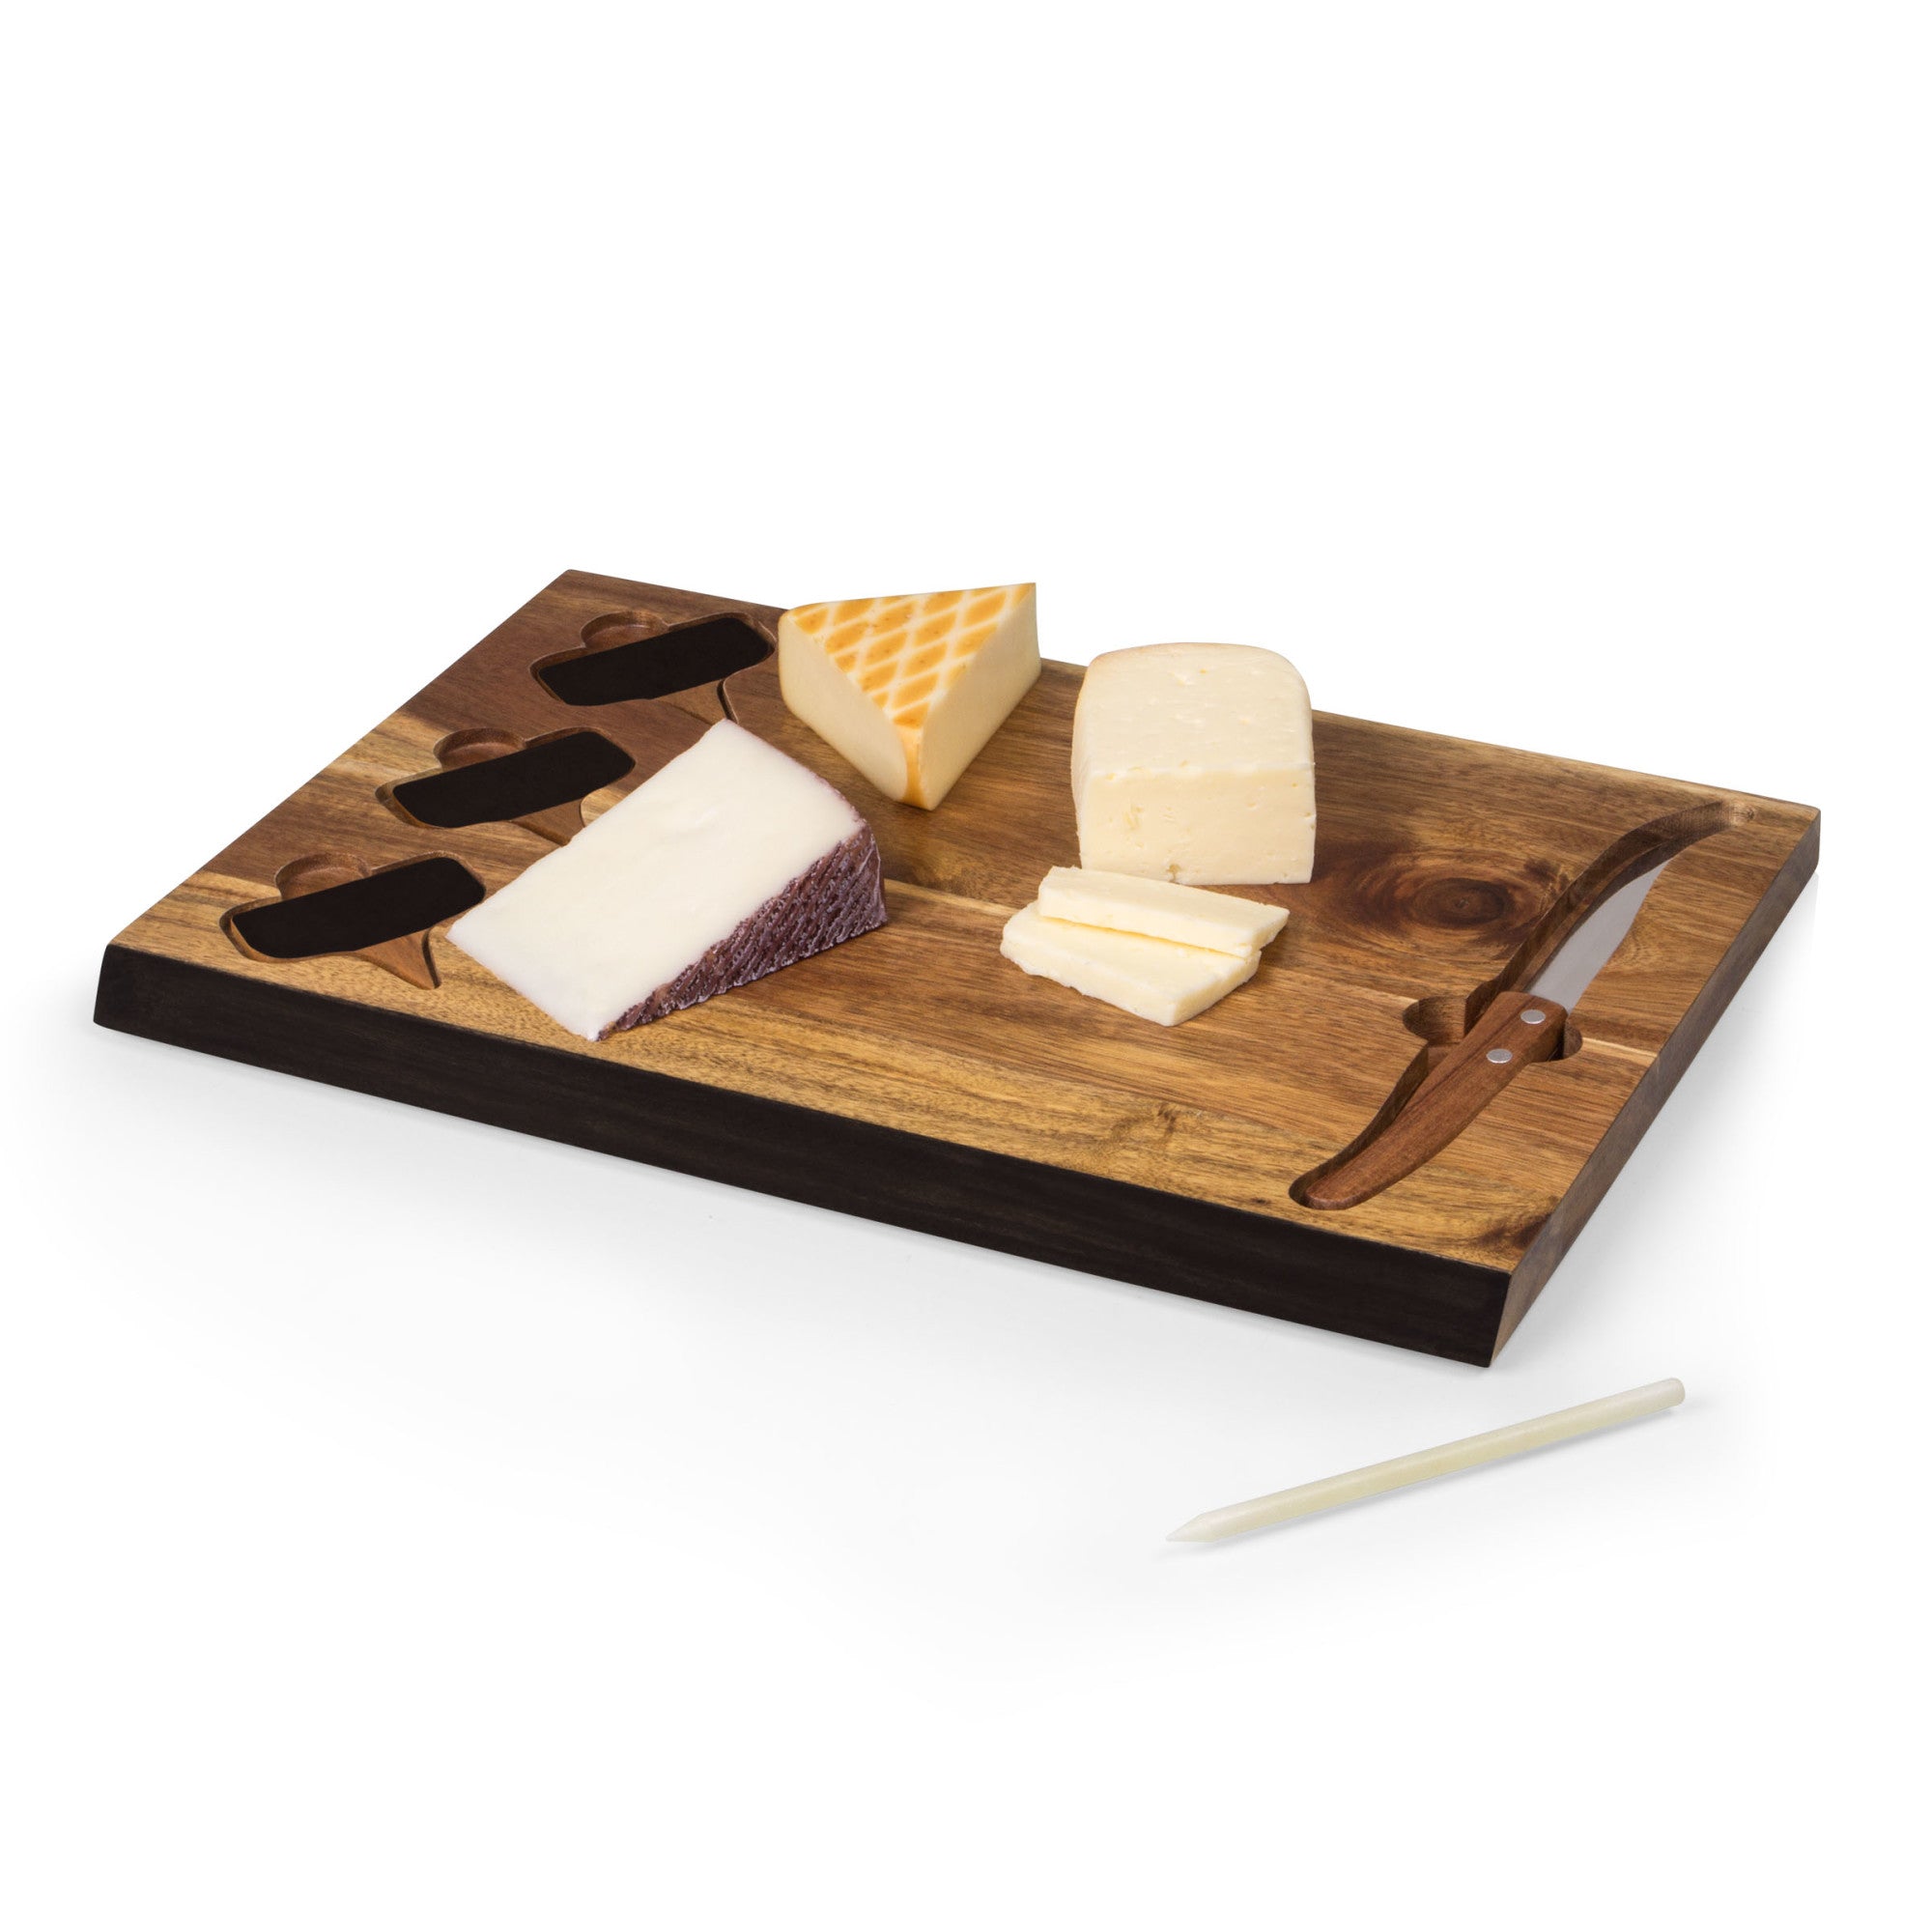 Denver Broncos - Delio Acacia Cheese Cutting Board & Tools Set